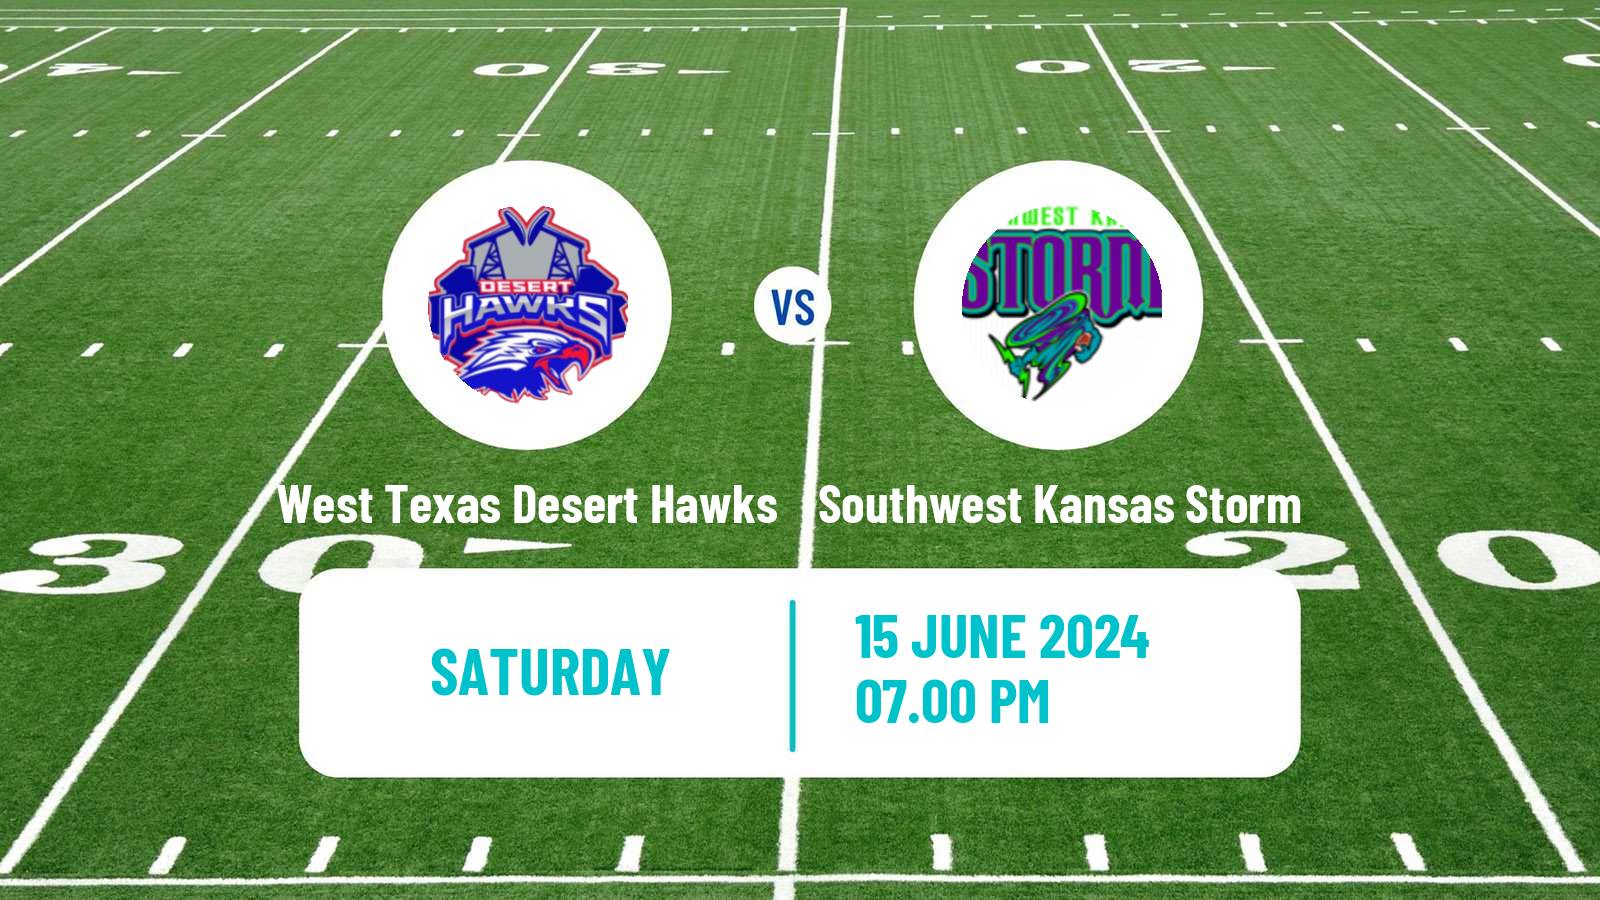 Arena football Arena Football League West Texas Desert Hawks - Southwest Kansas Storm